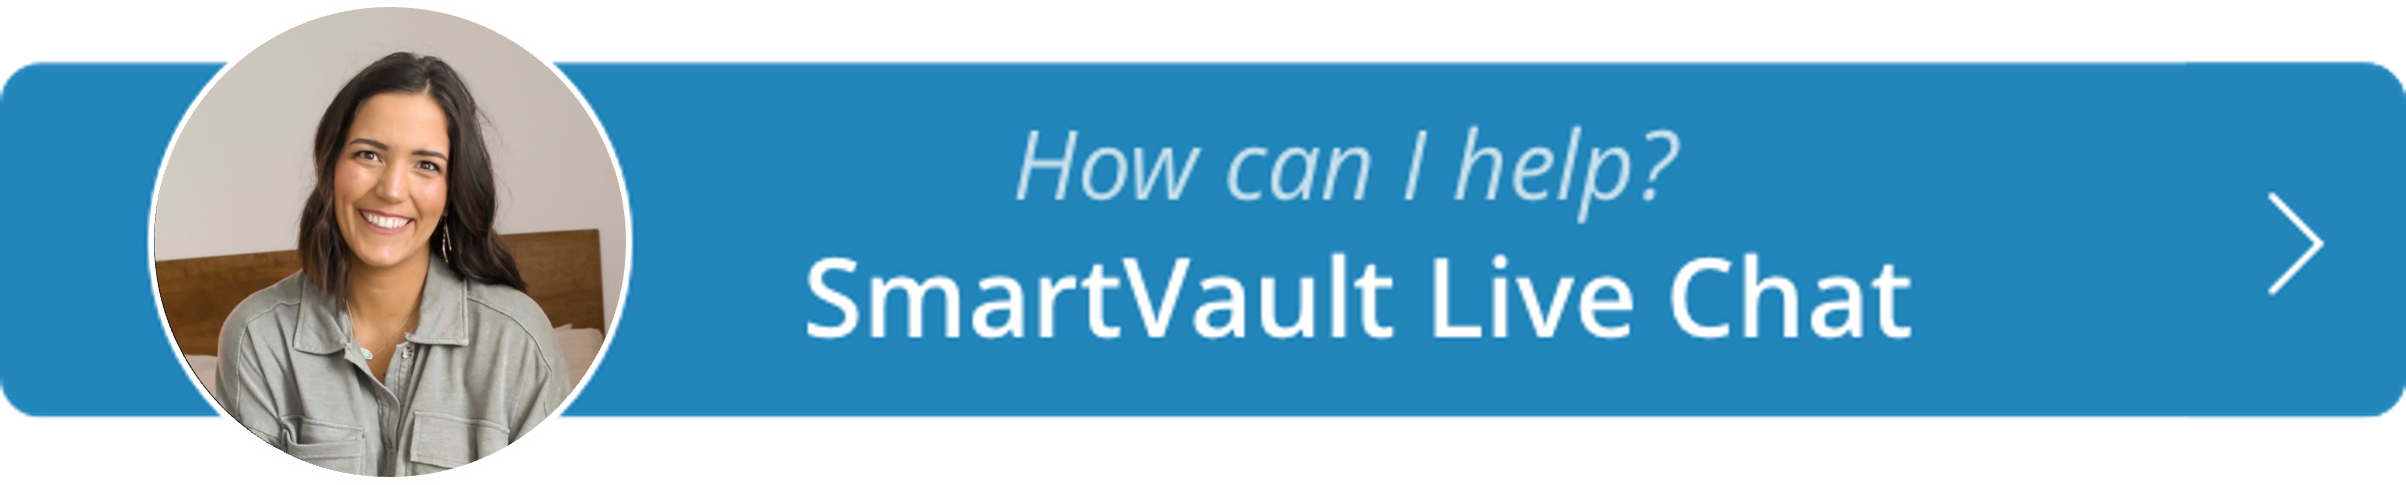 SmartVault Live Chat